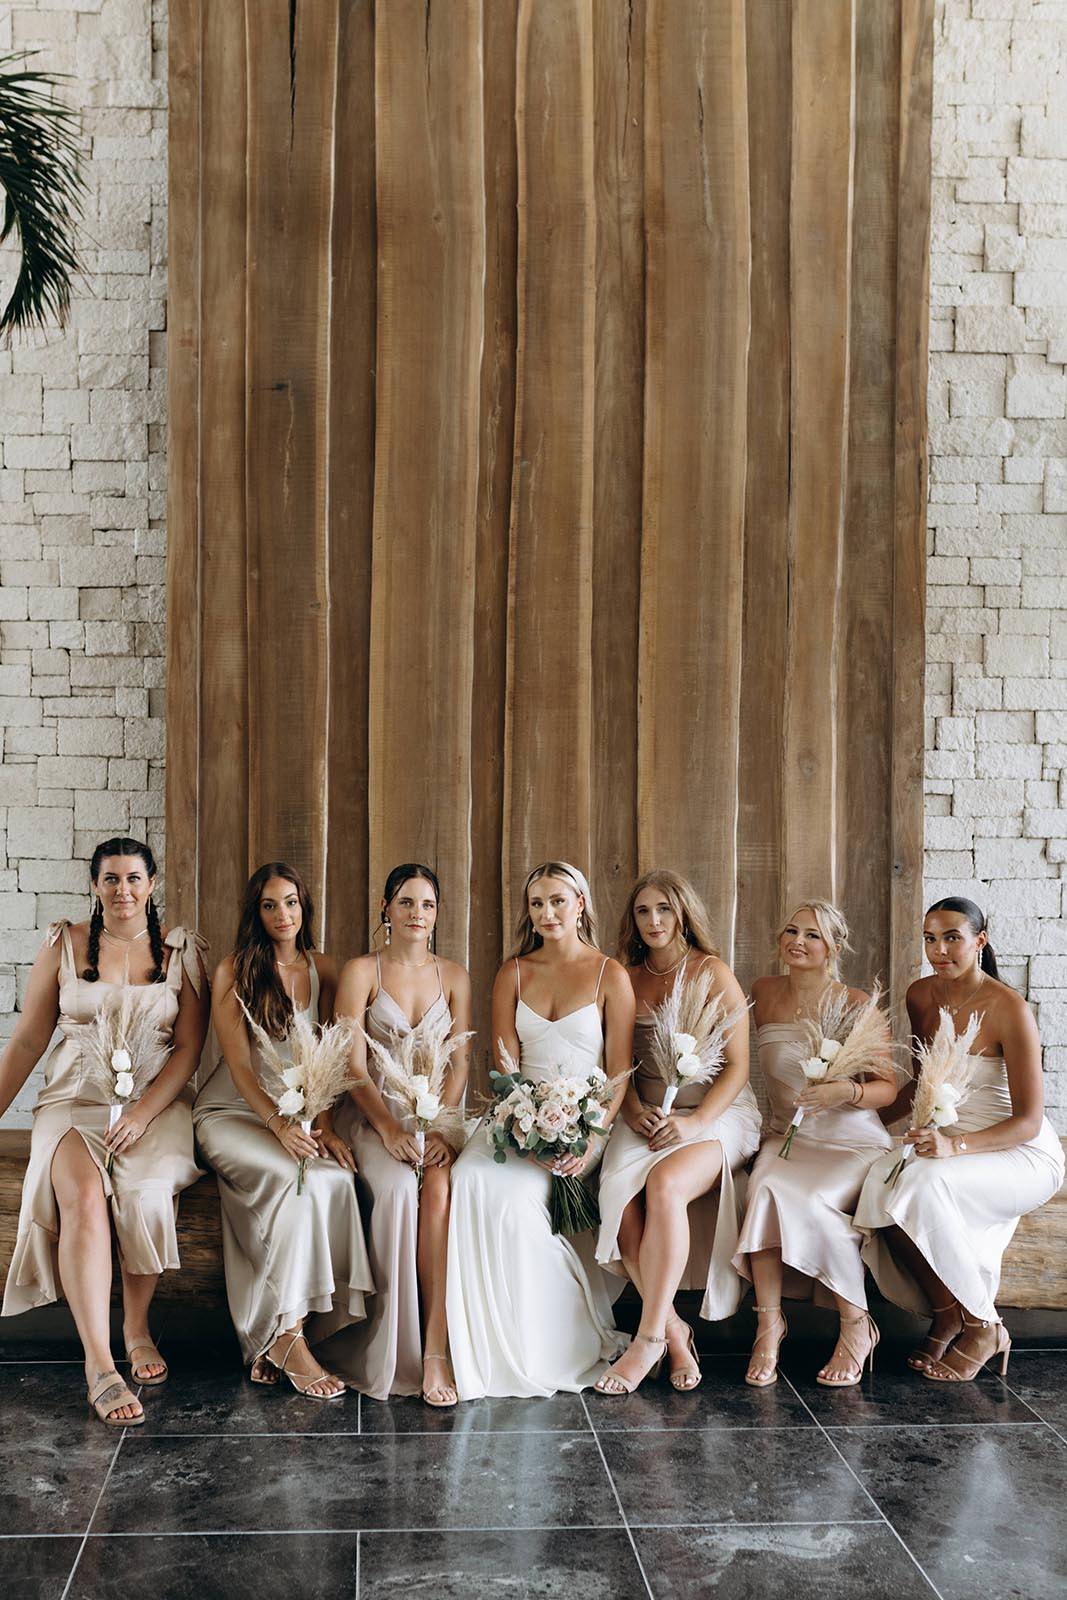 Bride, alongside her bridesmaids